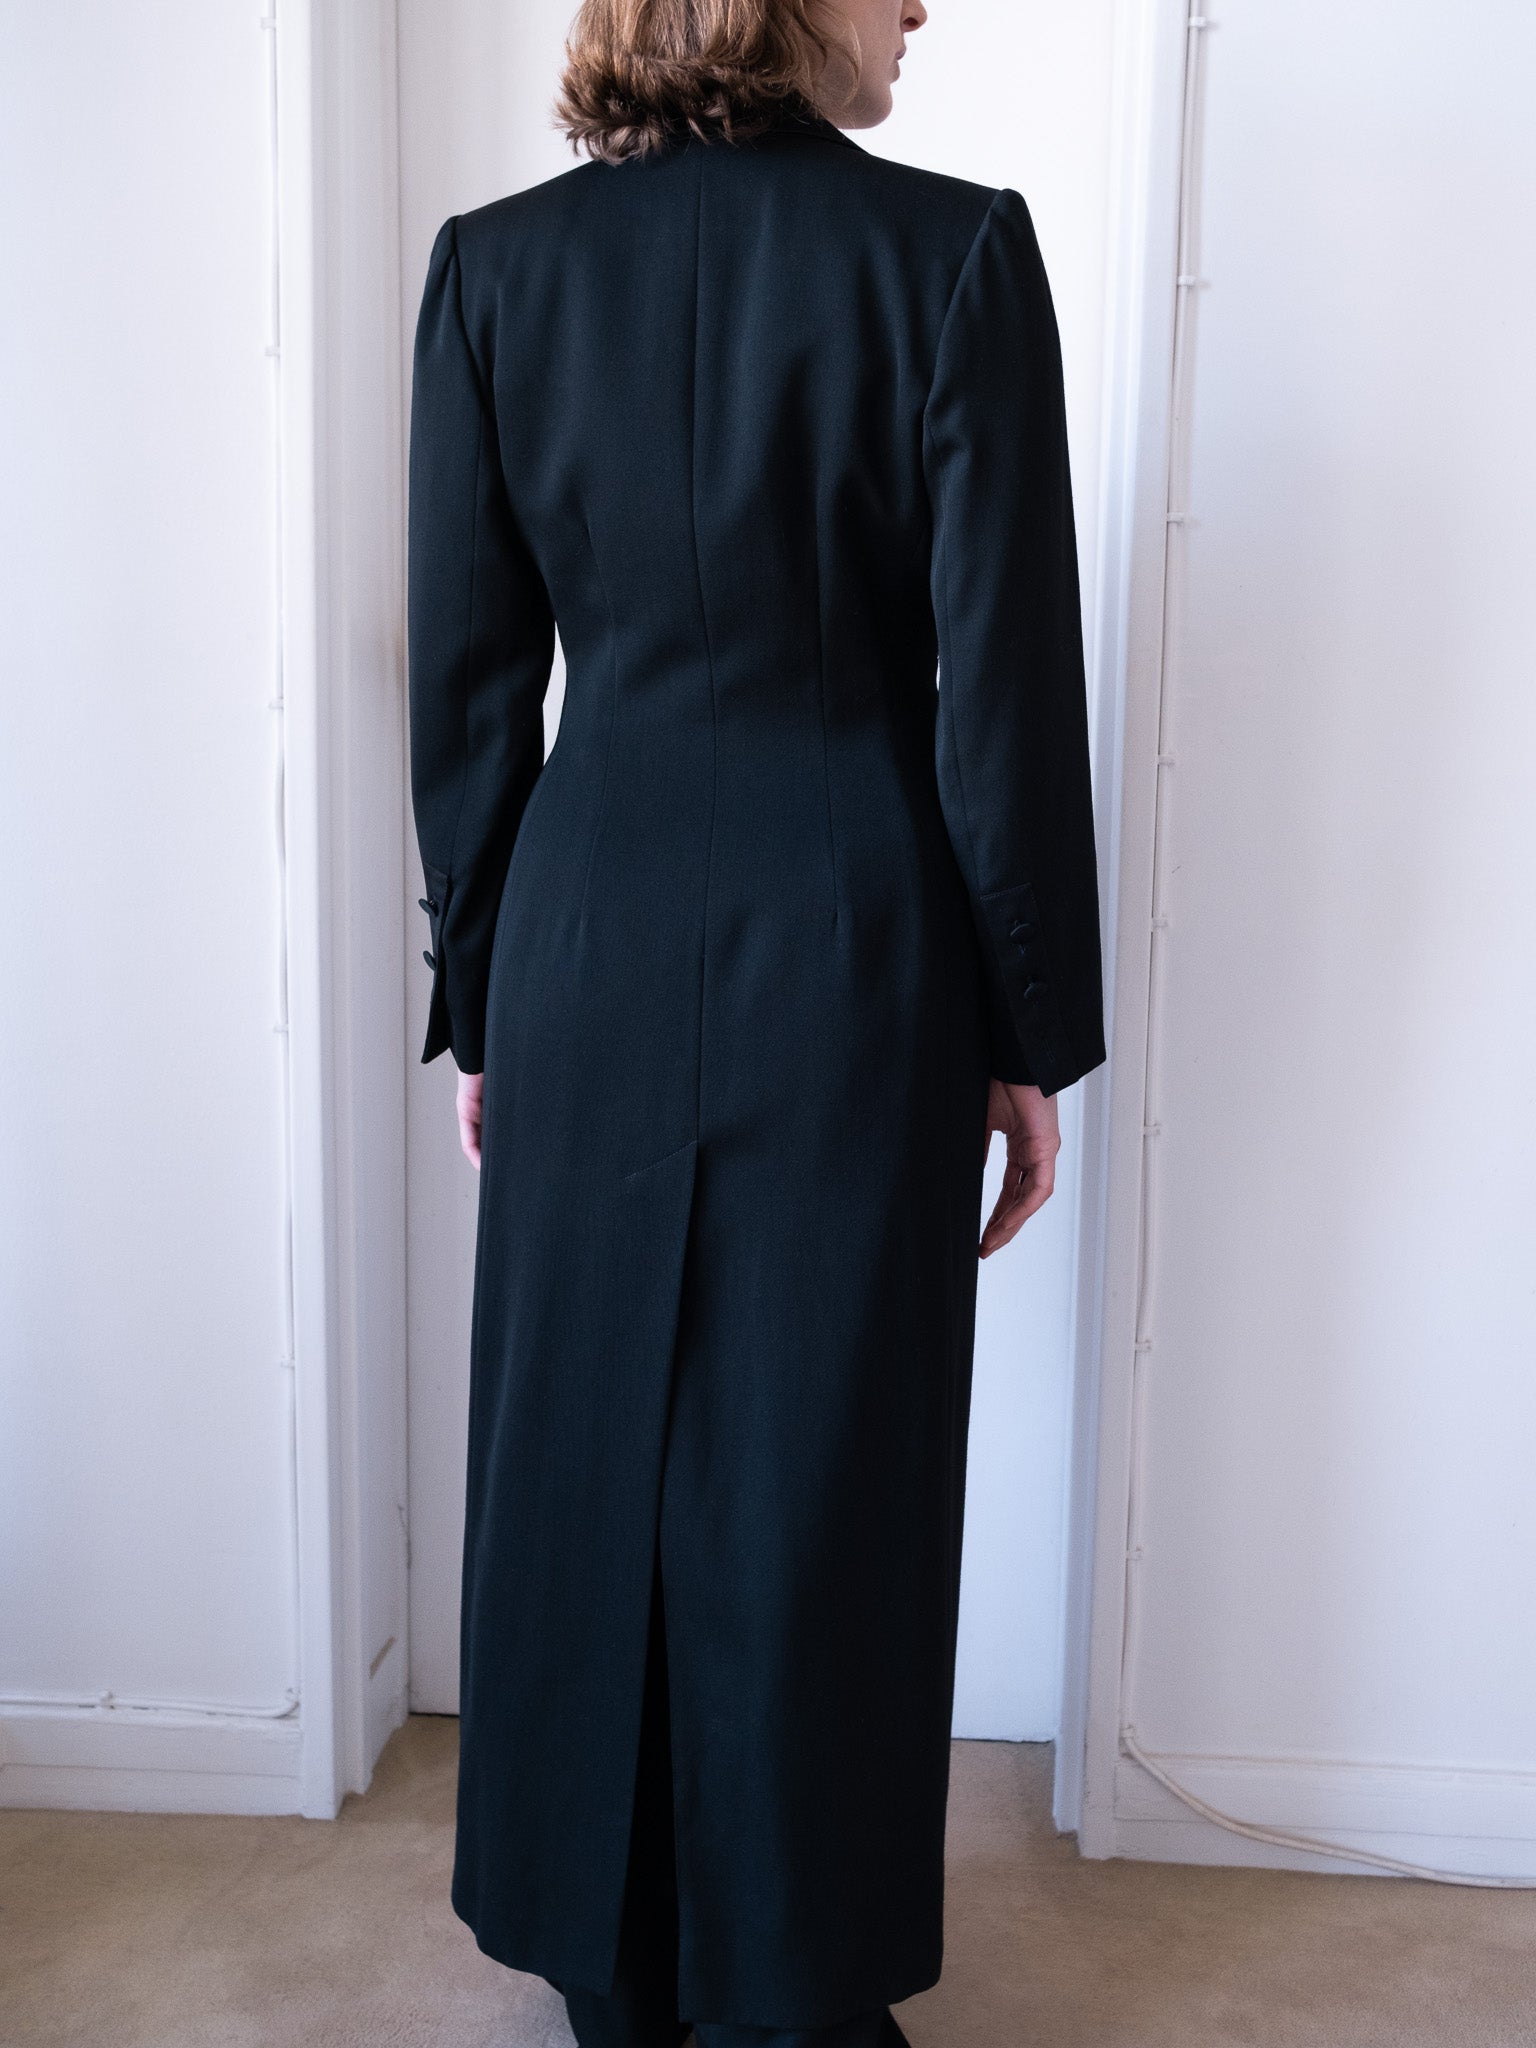 90's Yves Saint Laurent tailored jacket